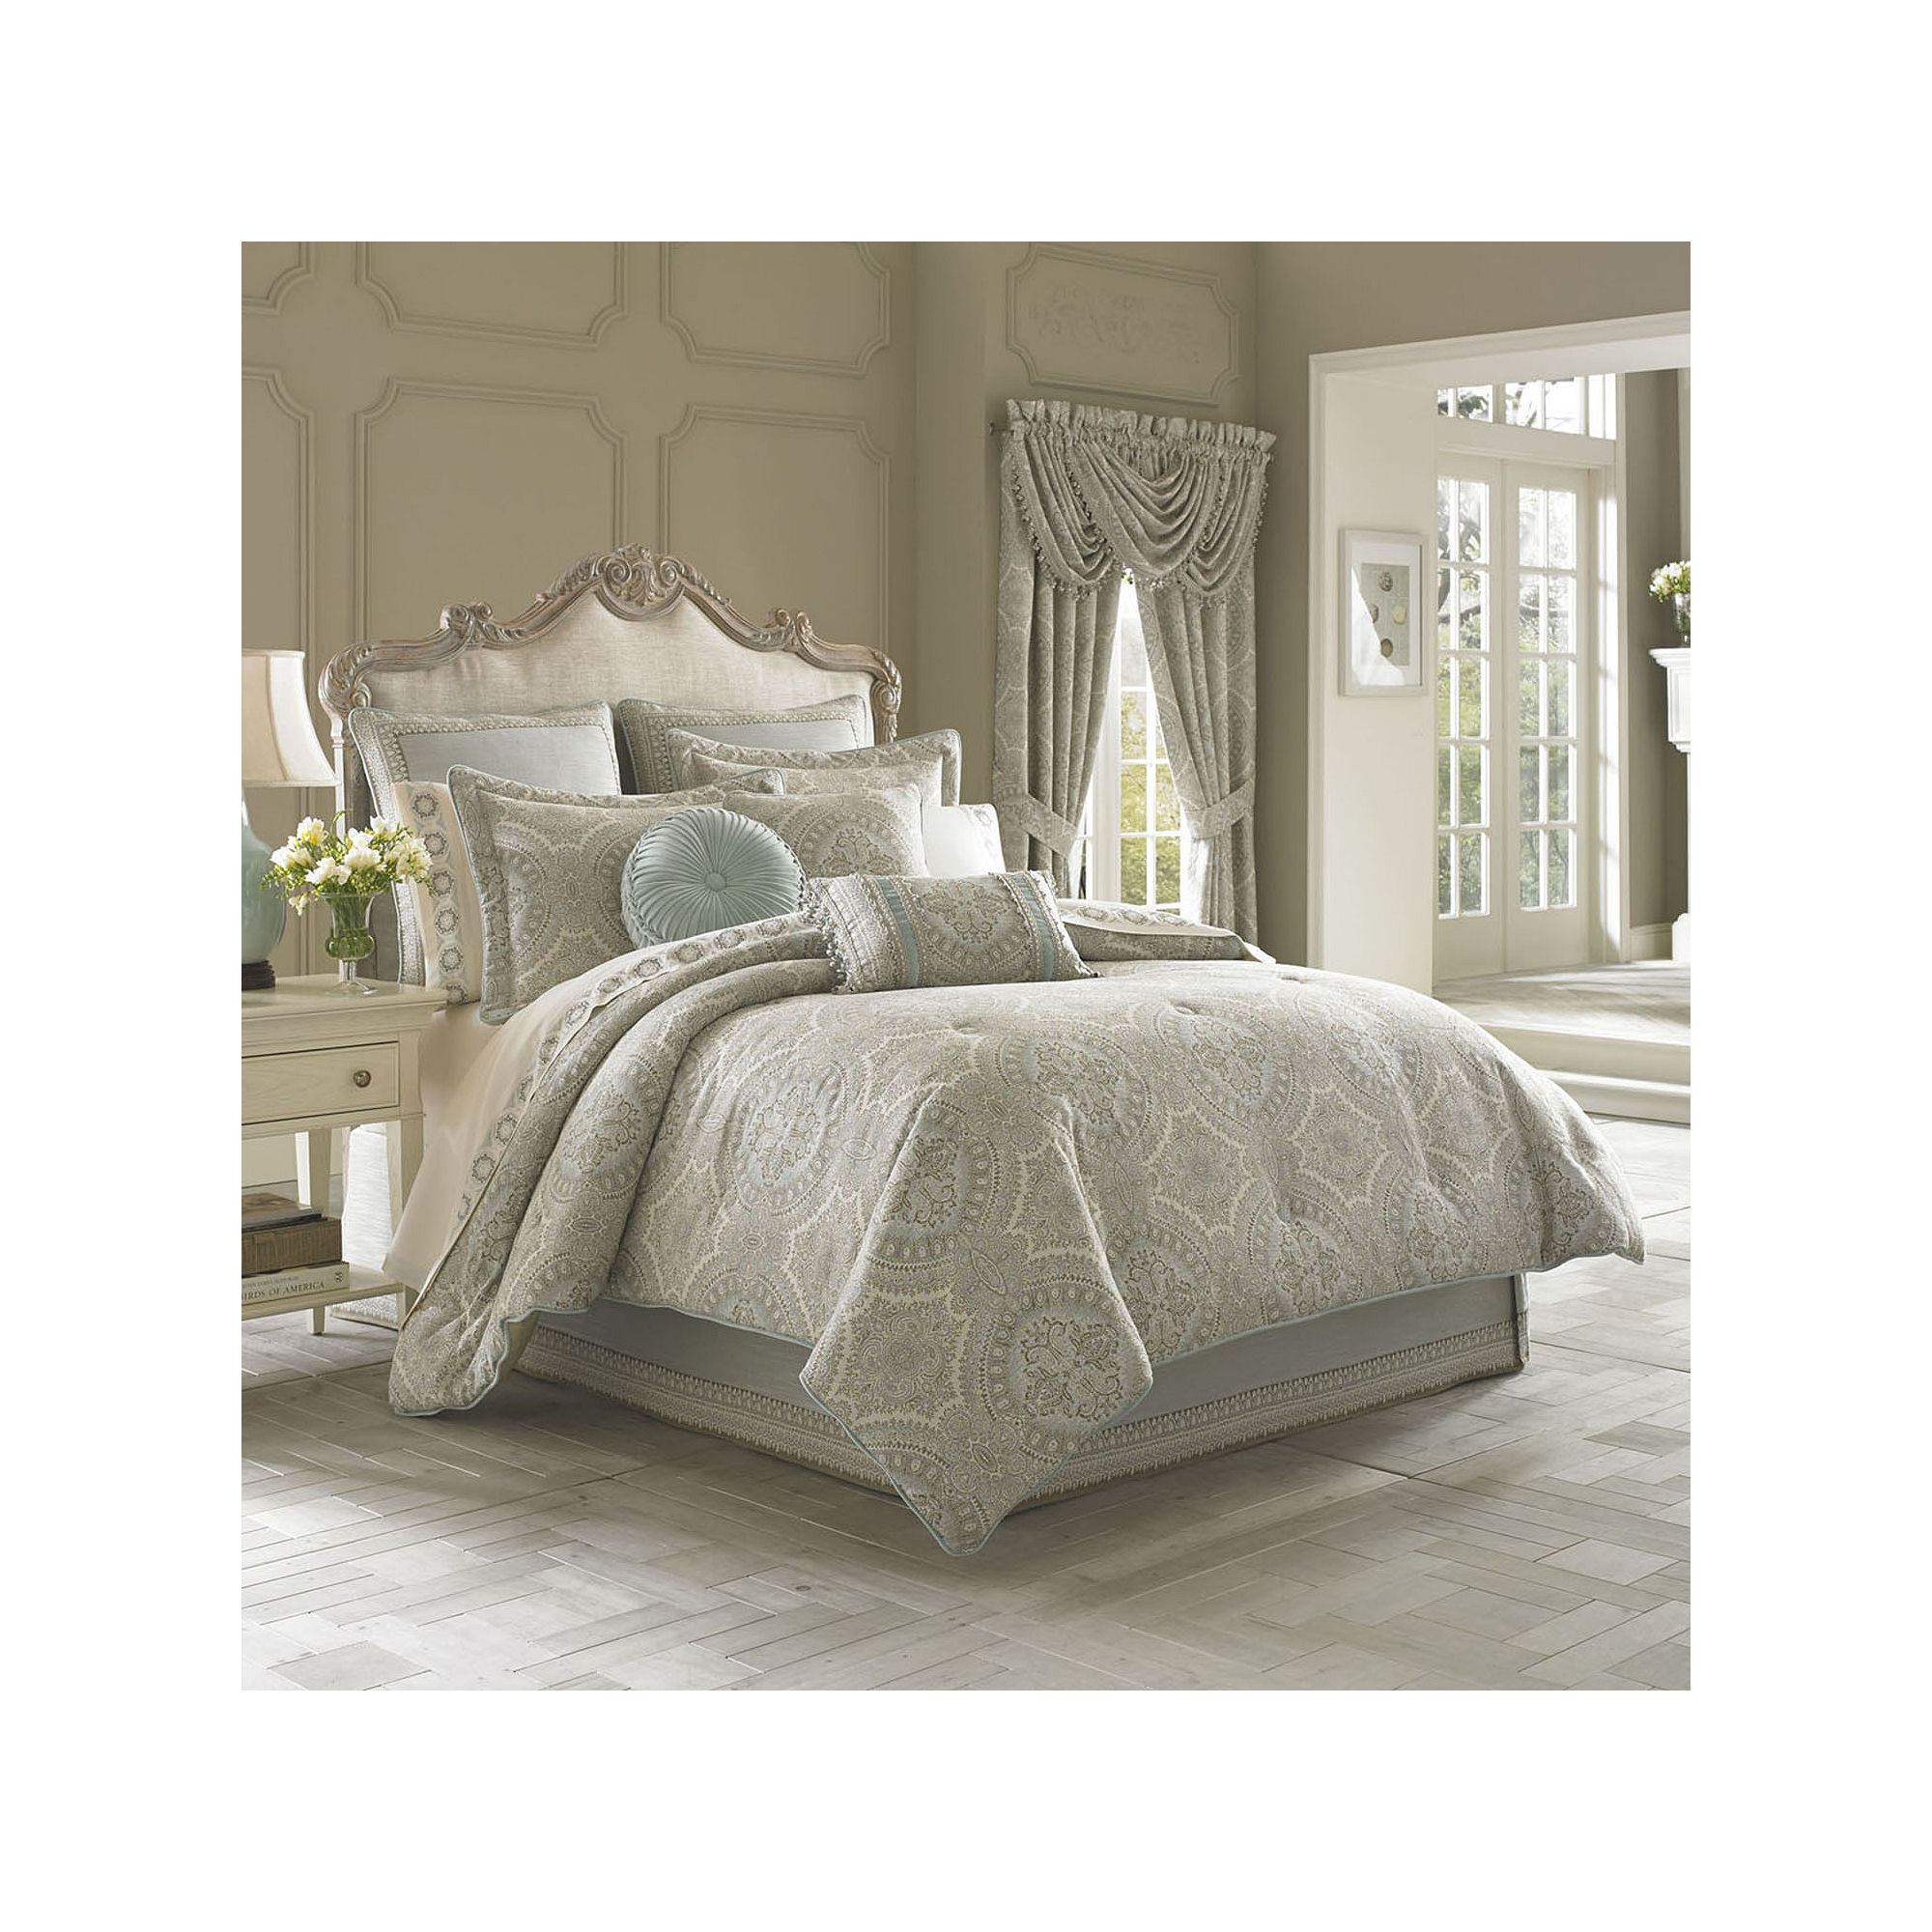 Queen Street Carlina 4-pc. Jacquard Comforter Set